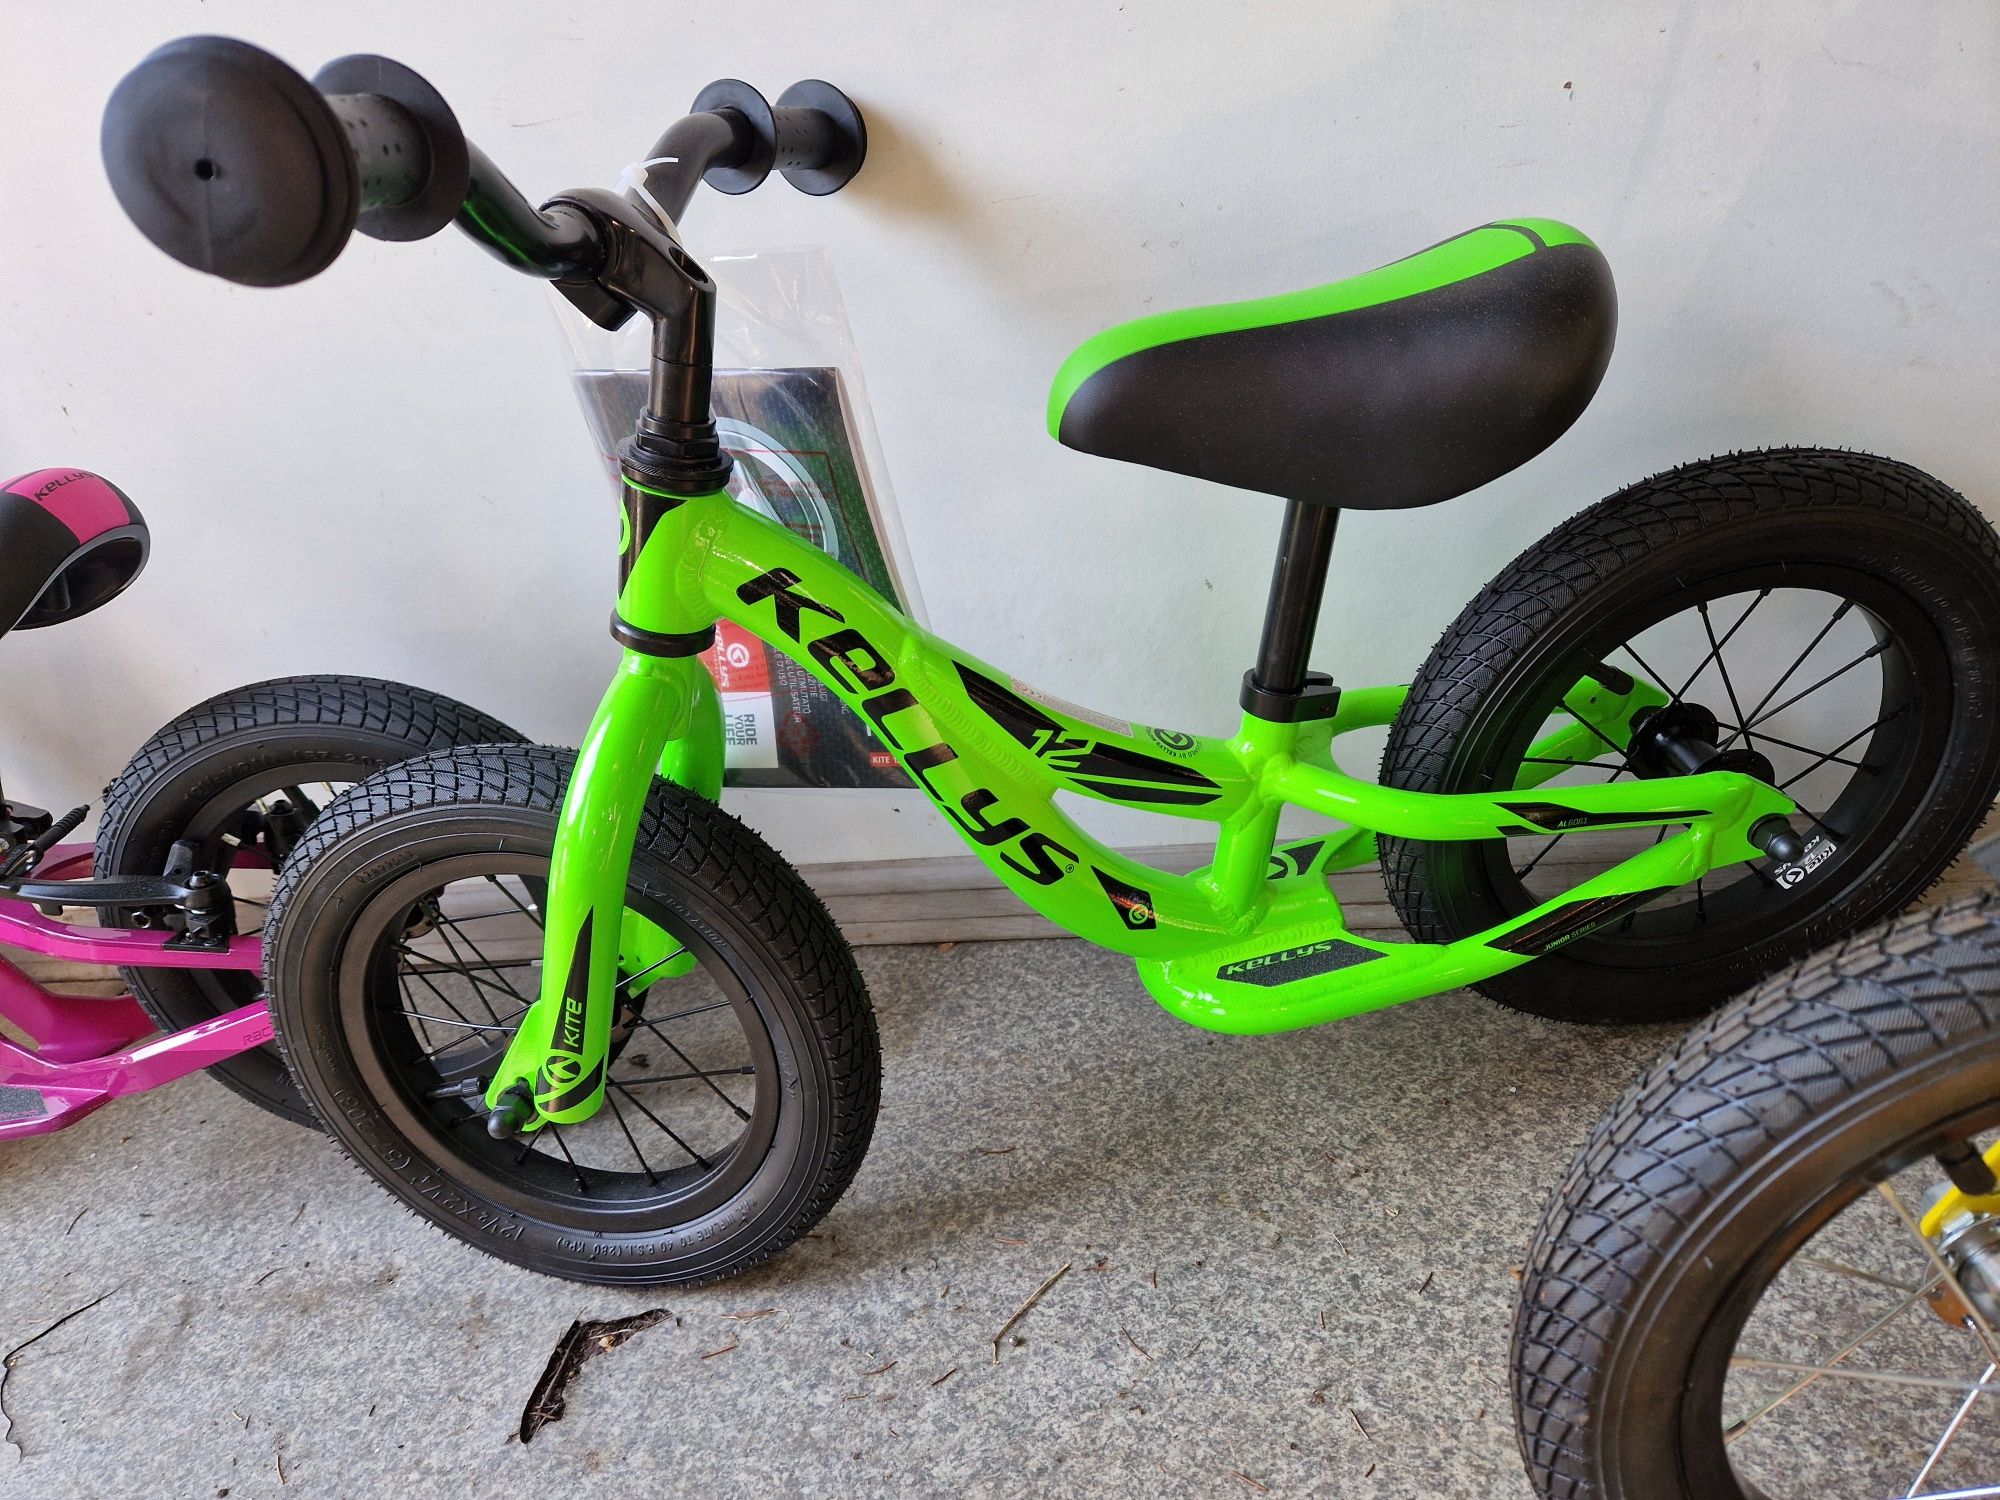 Nowy rowerek biegowy Kellys Kite zielony neon 3.9kg !!